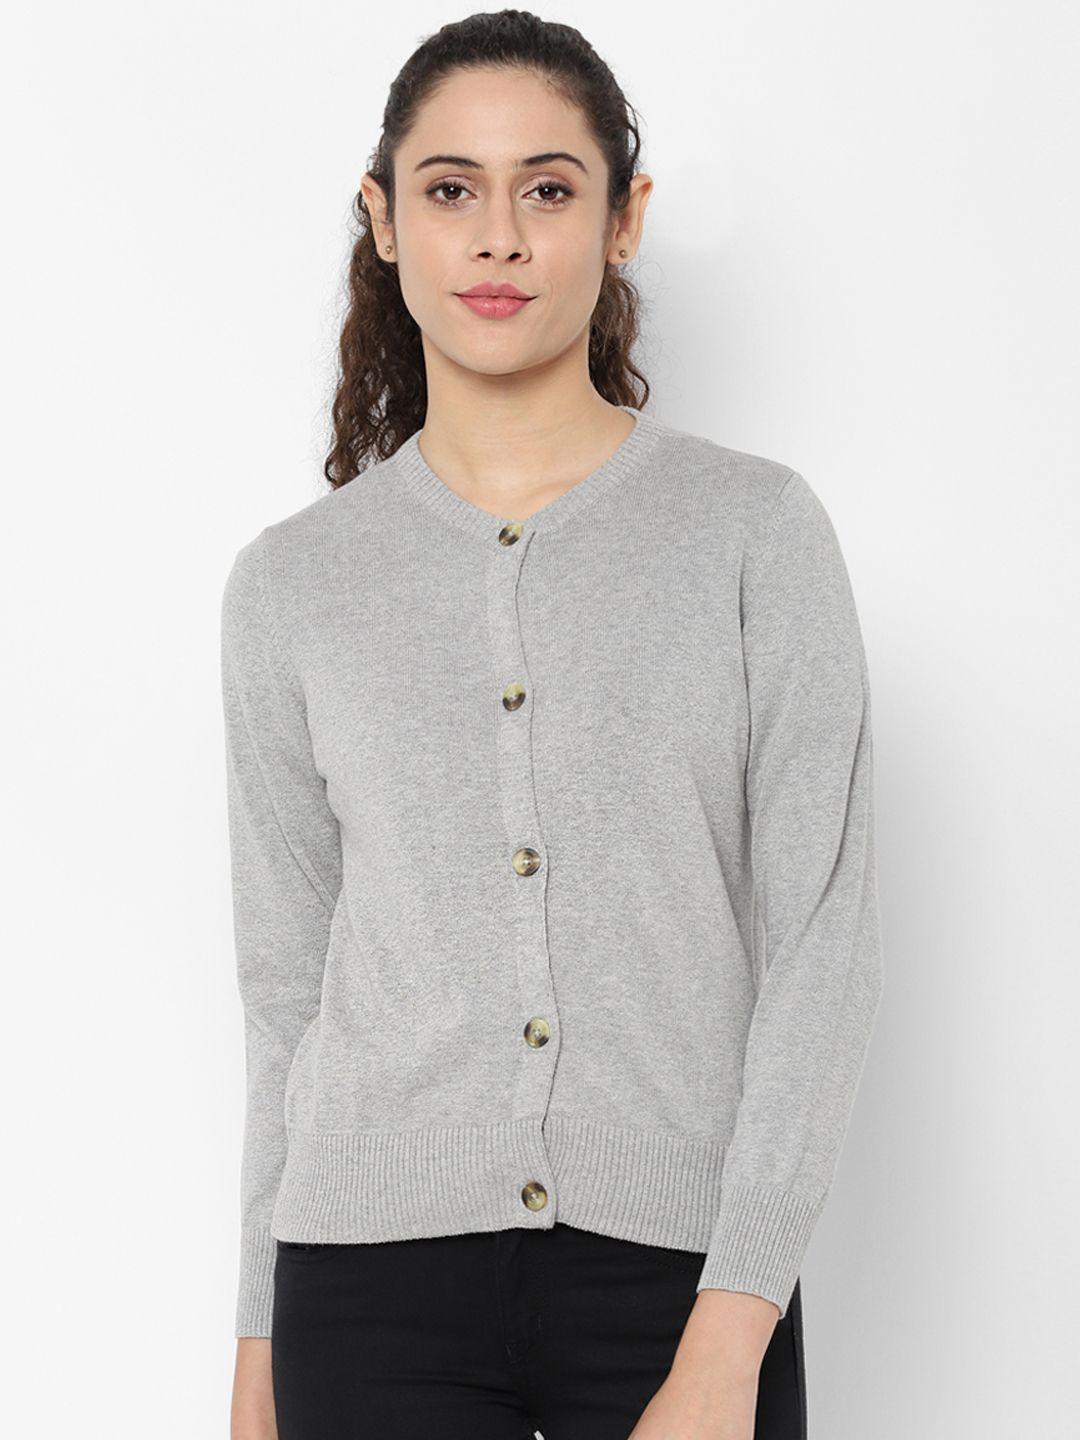 allen solly women grey solid cardigan sweater